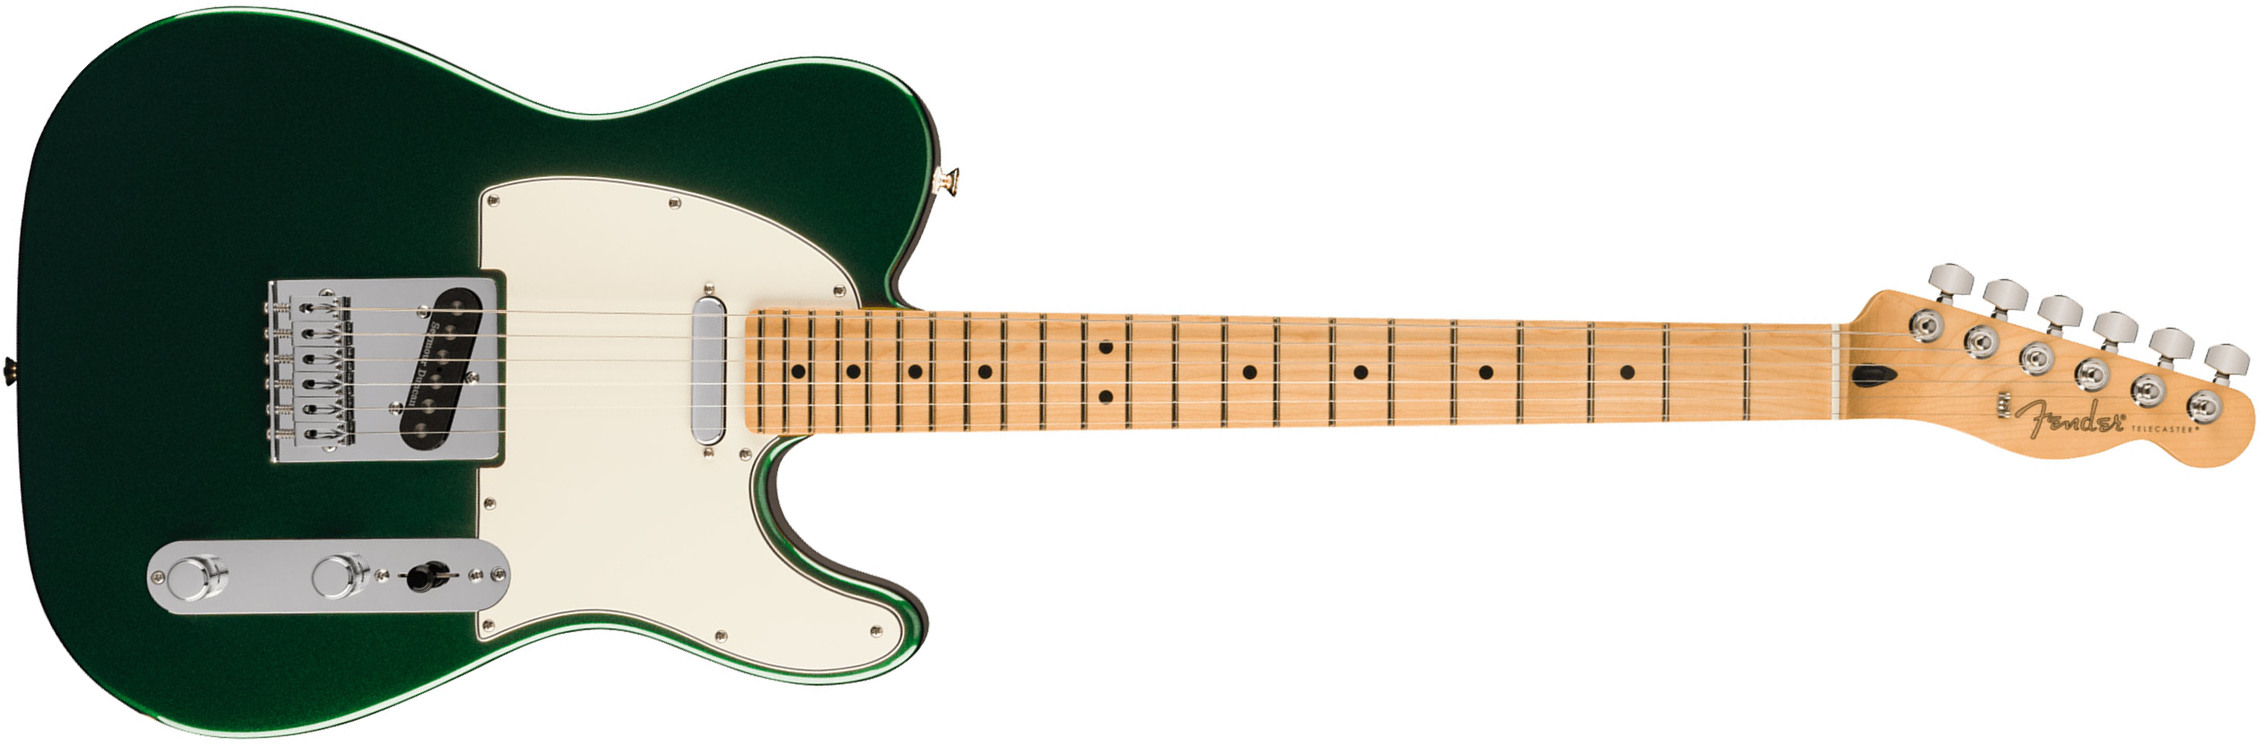 Fender Tele Player Ltd Mex 2s Seymour Duncan Mn - British Racing Green - Tel shape electric guitar - Main picture